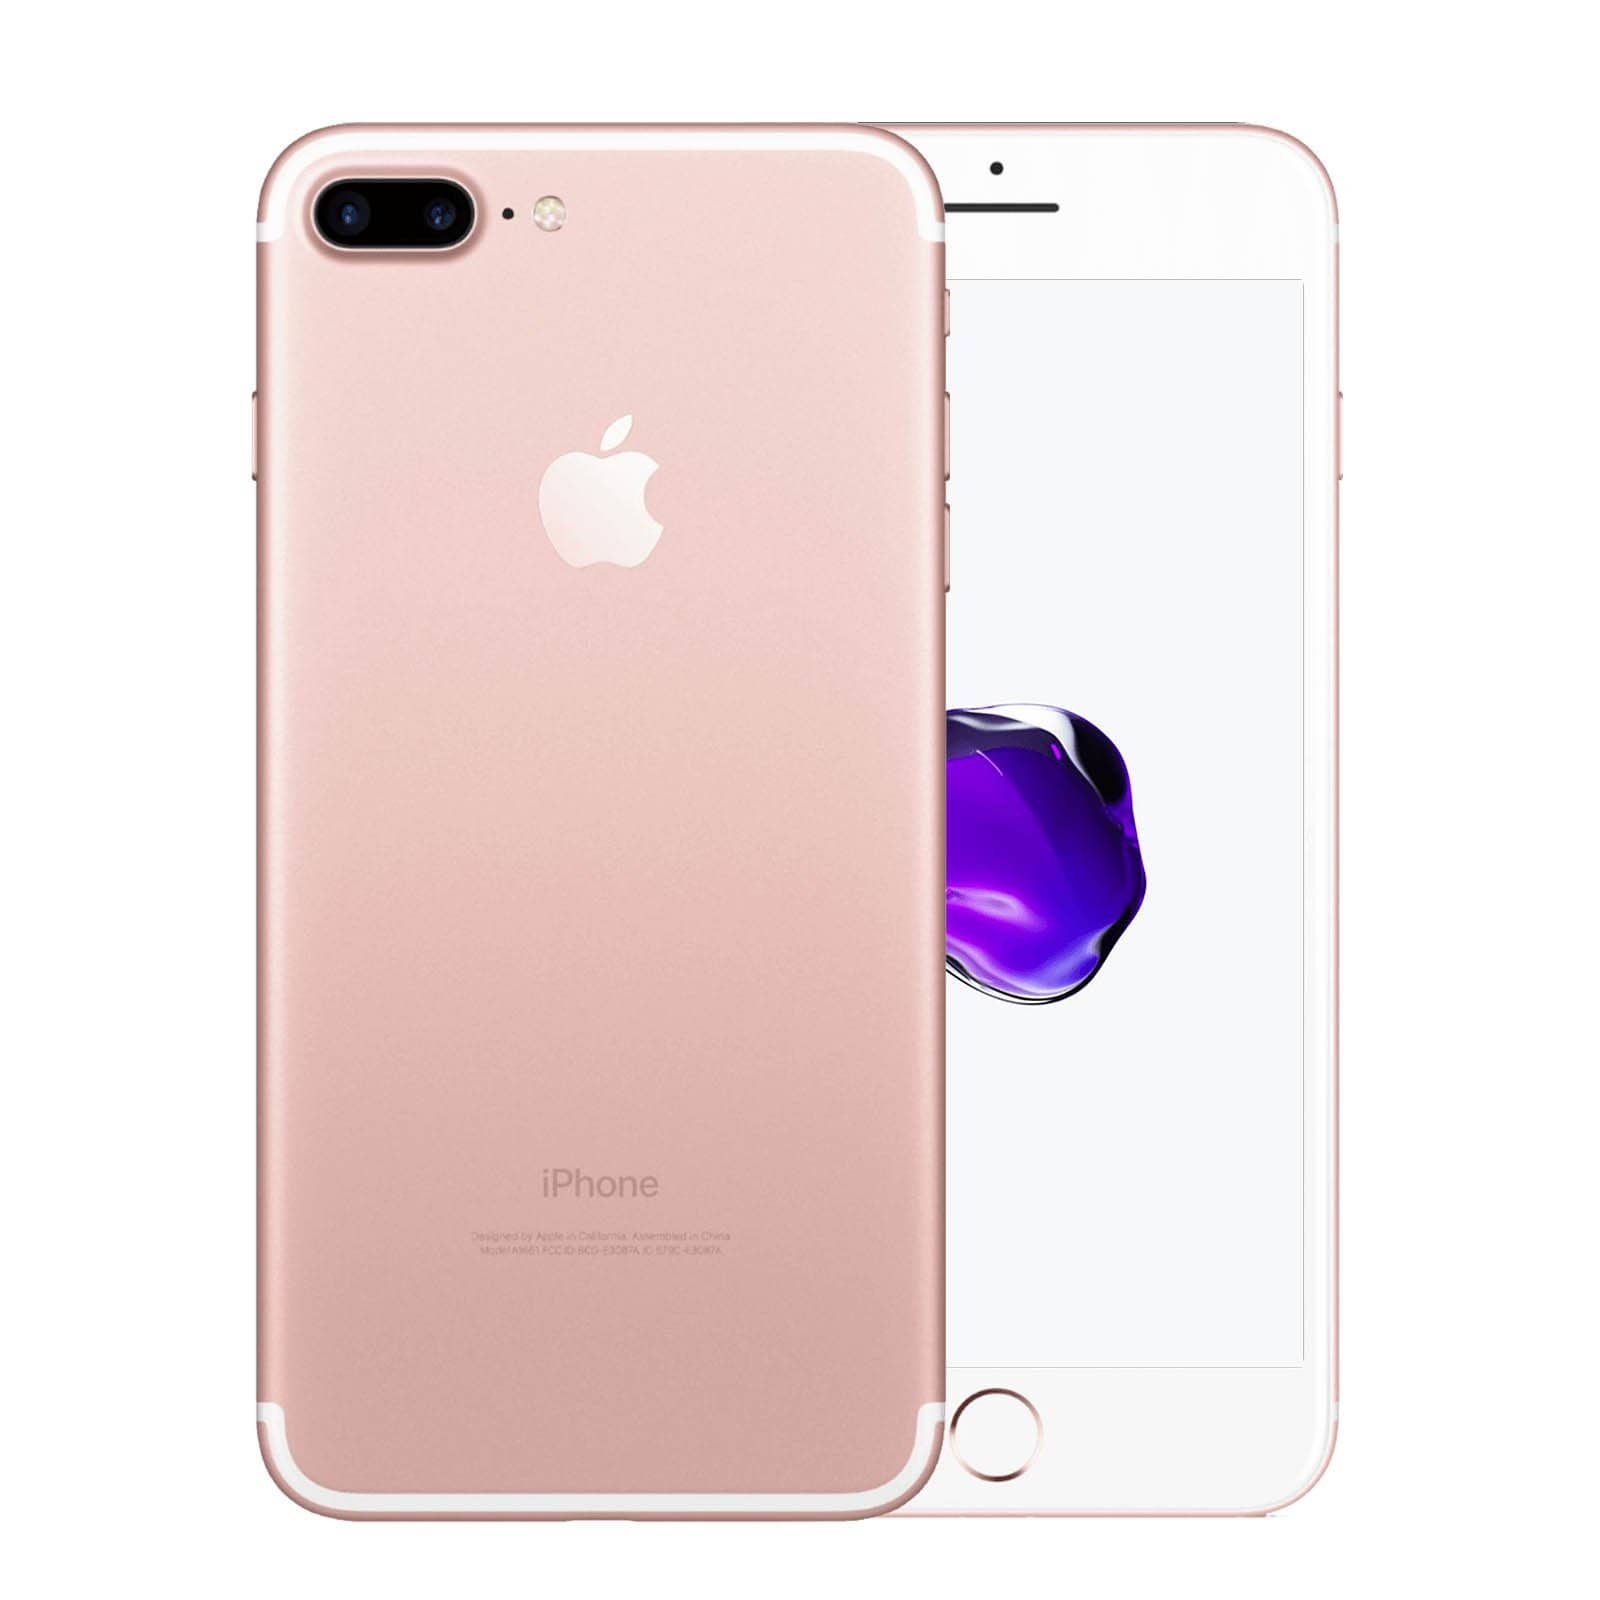 Apple iPhone 7 Plus 128GB Rose Gold Good - Unlocked 128GB Rose Gold Good